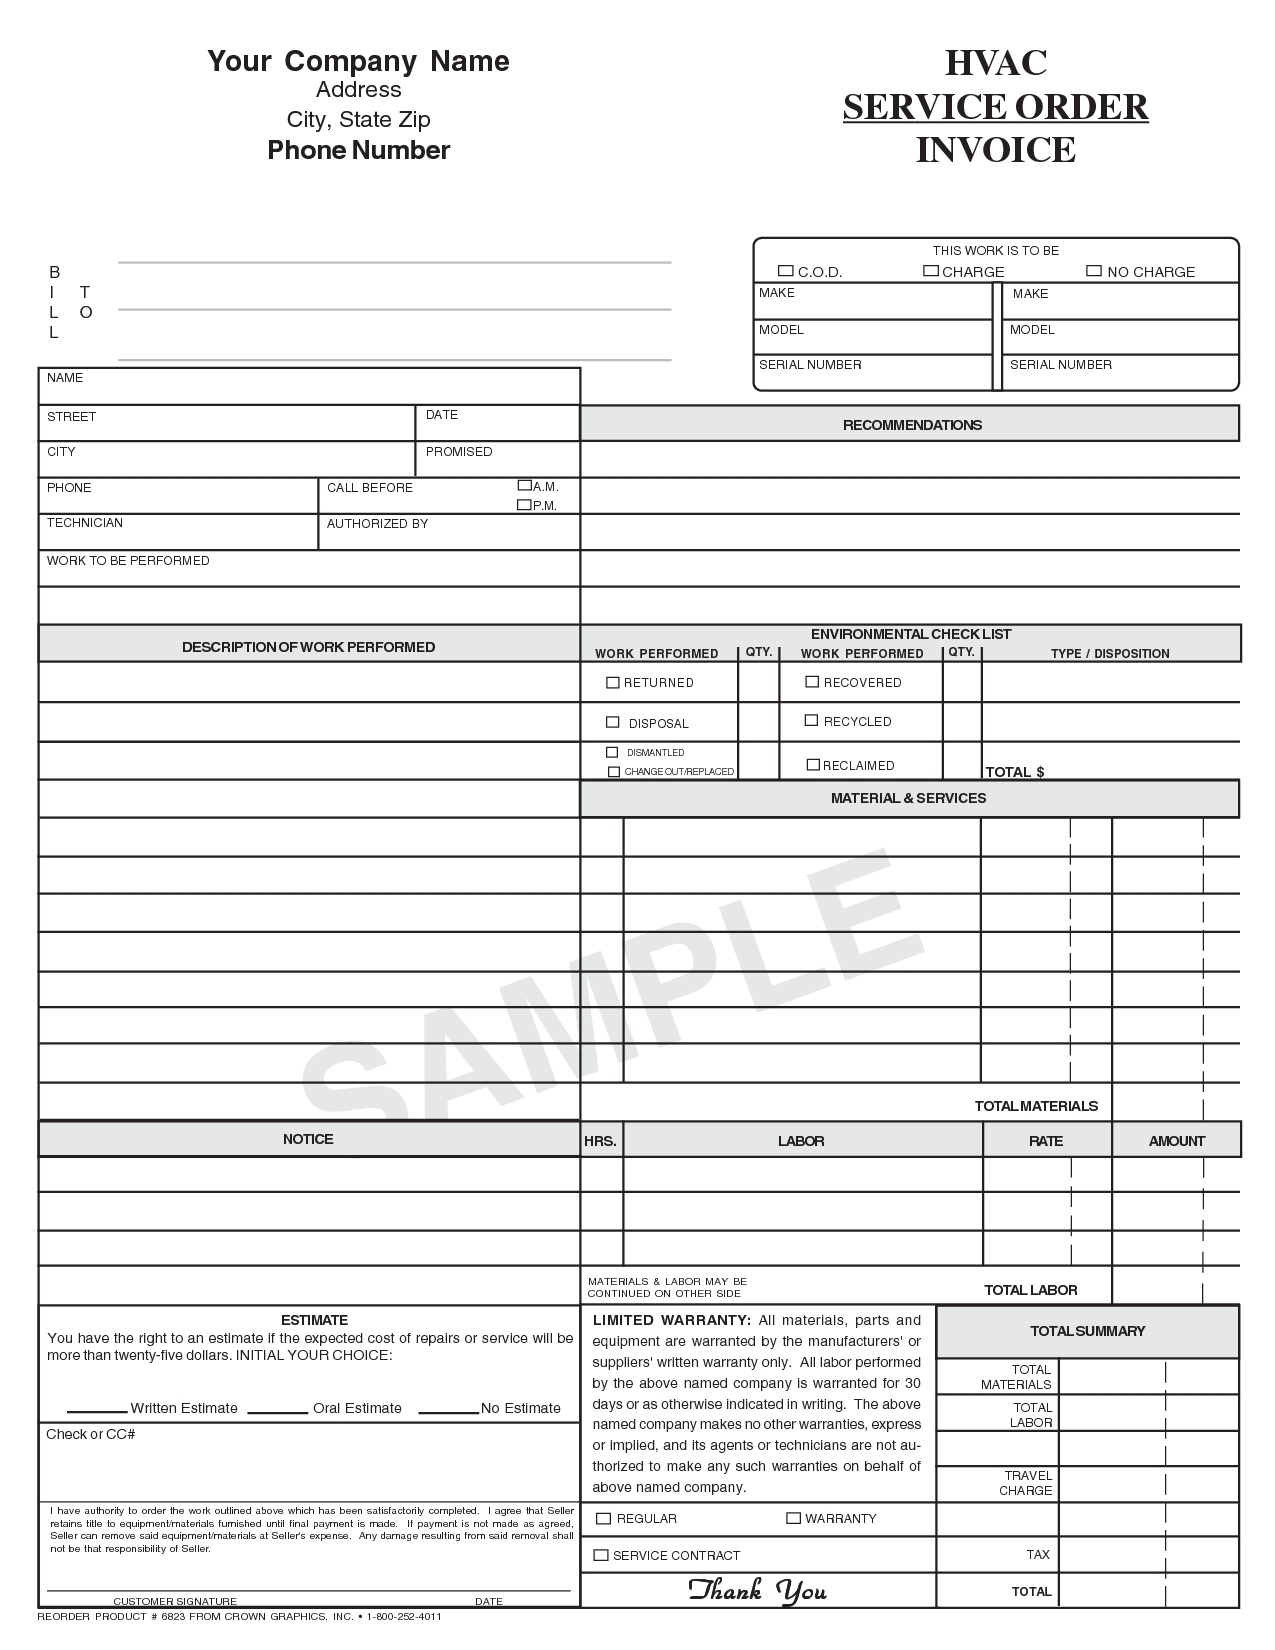 hvac invoice template printable invoice template free hvac invoice template